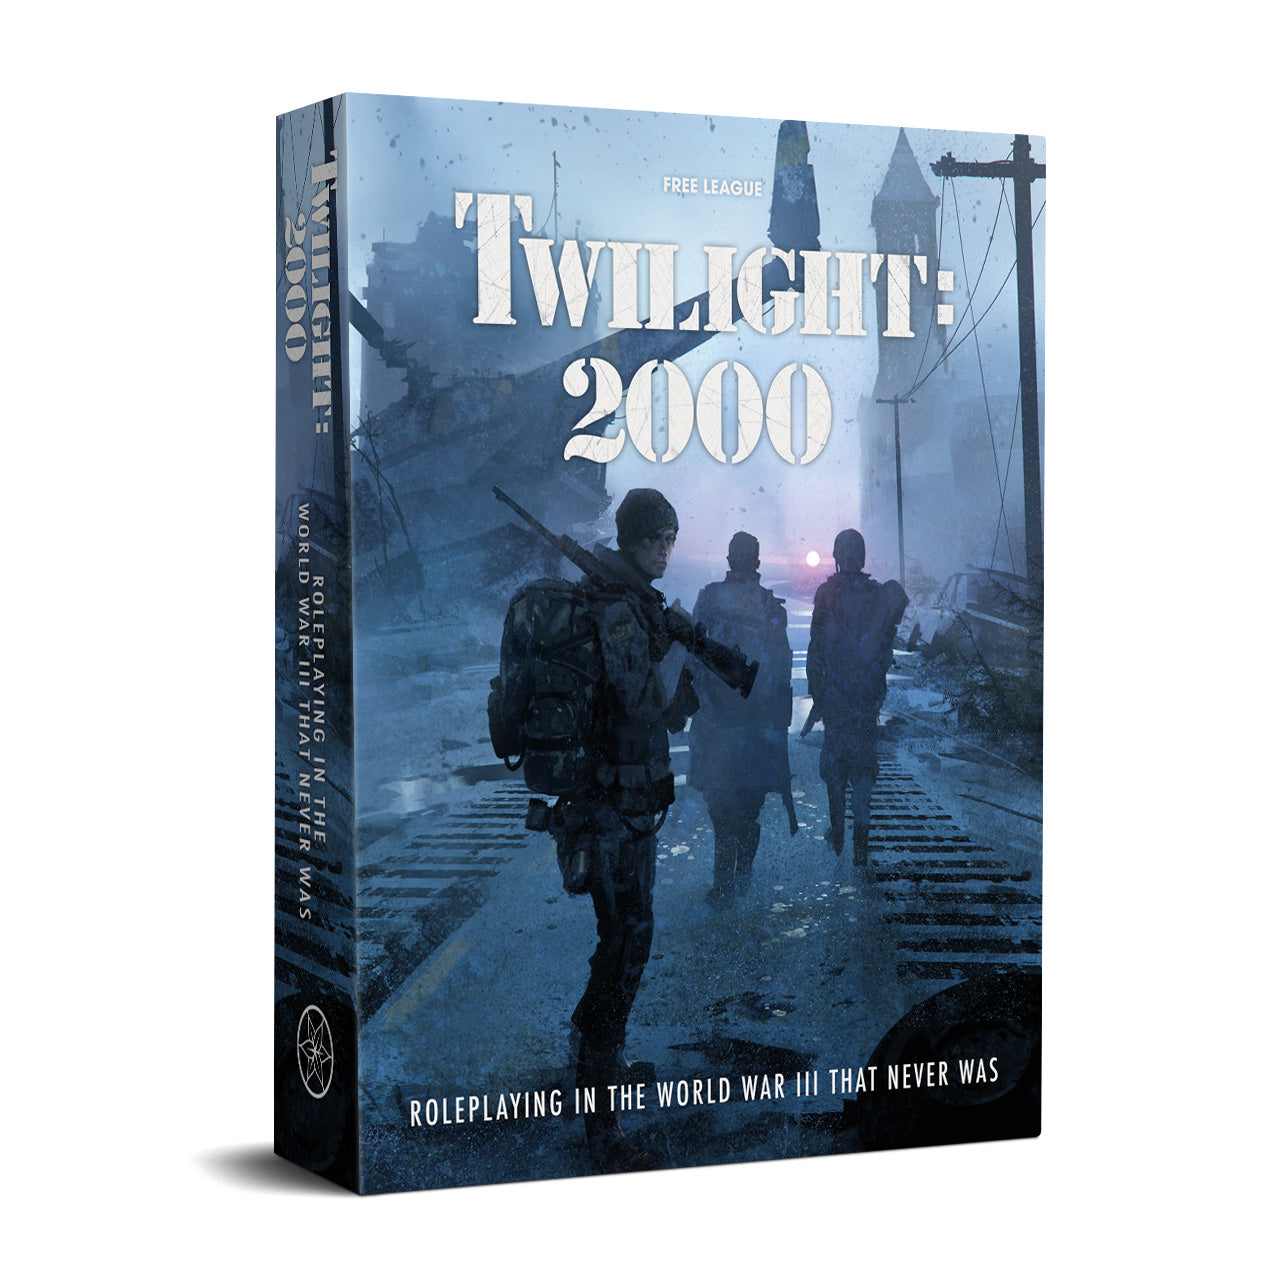 Twilight: 2000 RPG Core Box Set -  Free League